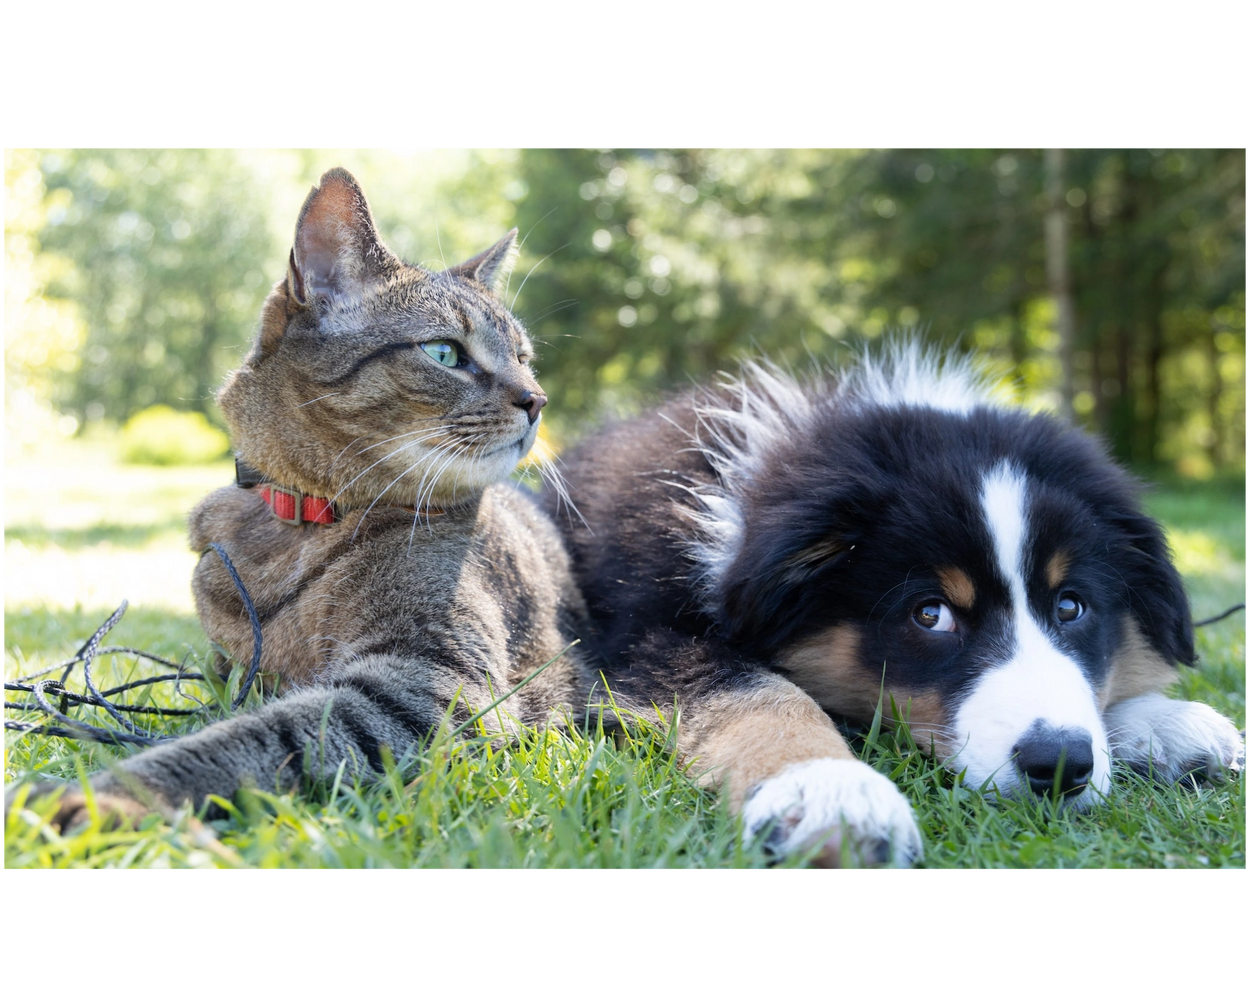 #dogs #cats #preventivecare #veterinarian
#petcare #BookOnline 
#HealthierPetVeterinaryCare
